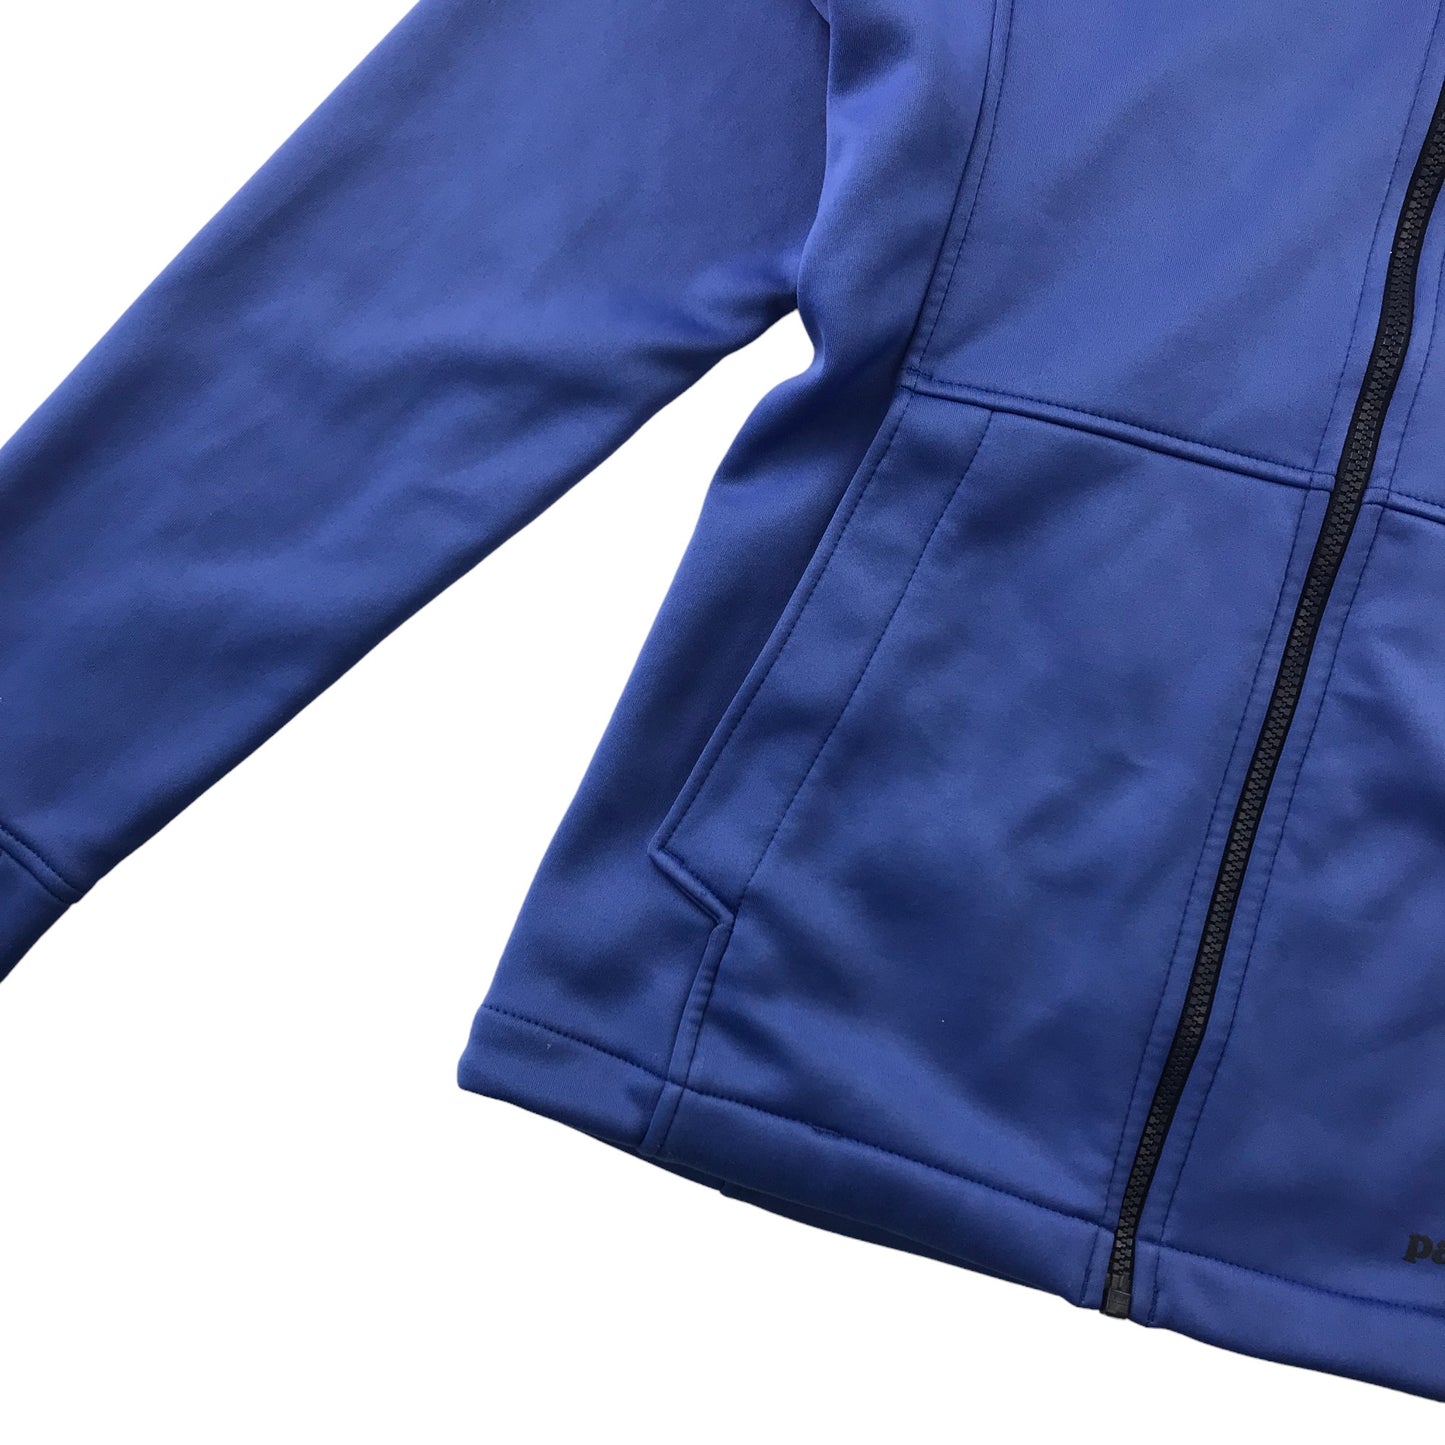 Patagonia Hoodie Size Women XS Blue Full Zipper Sweater Top